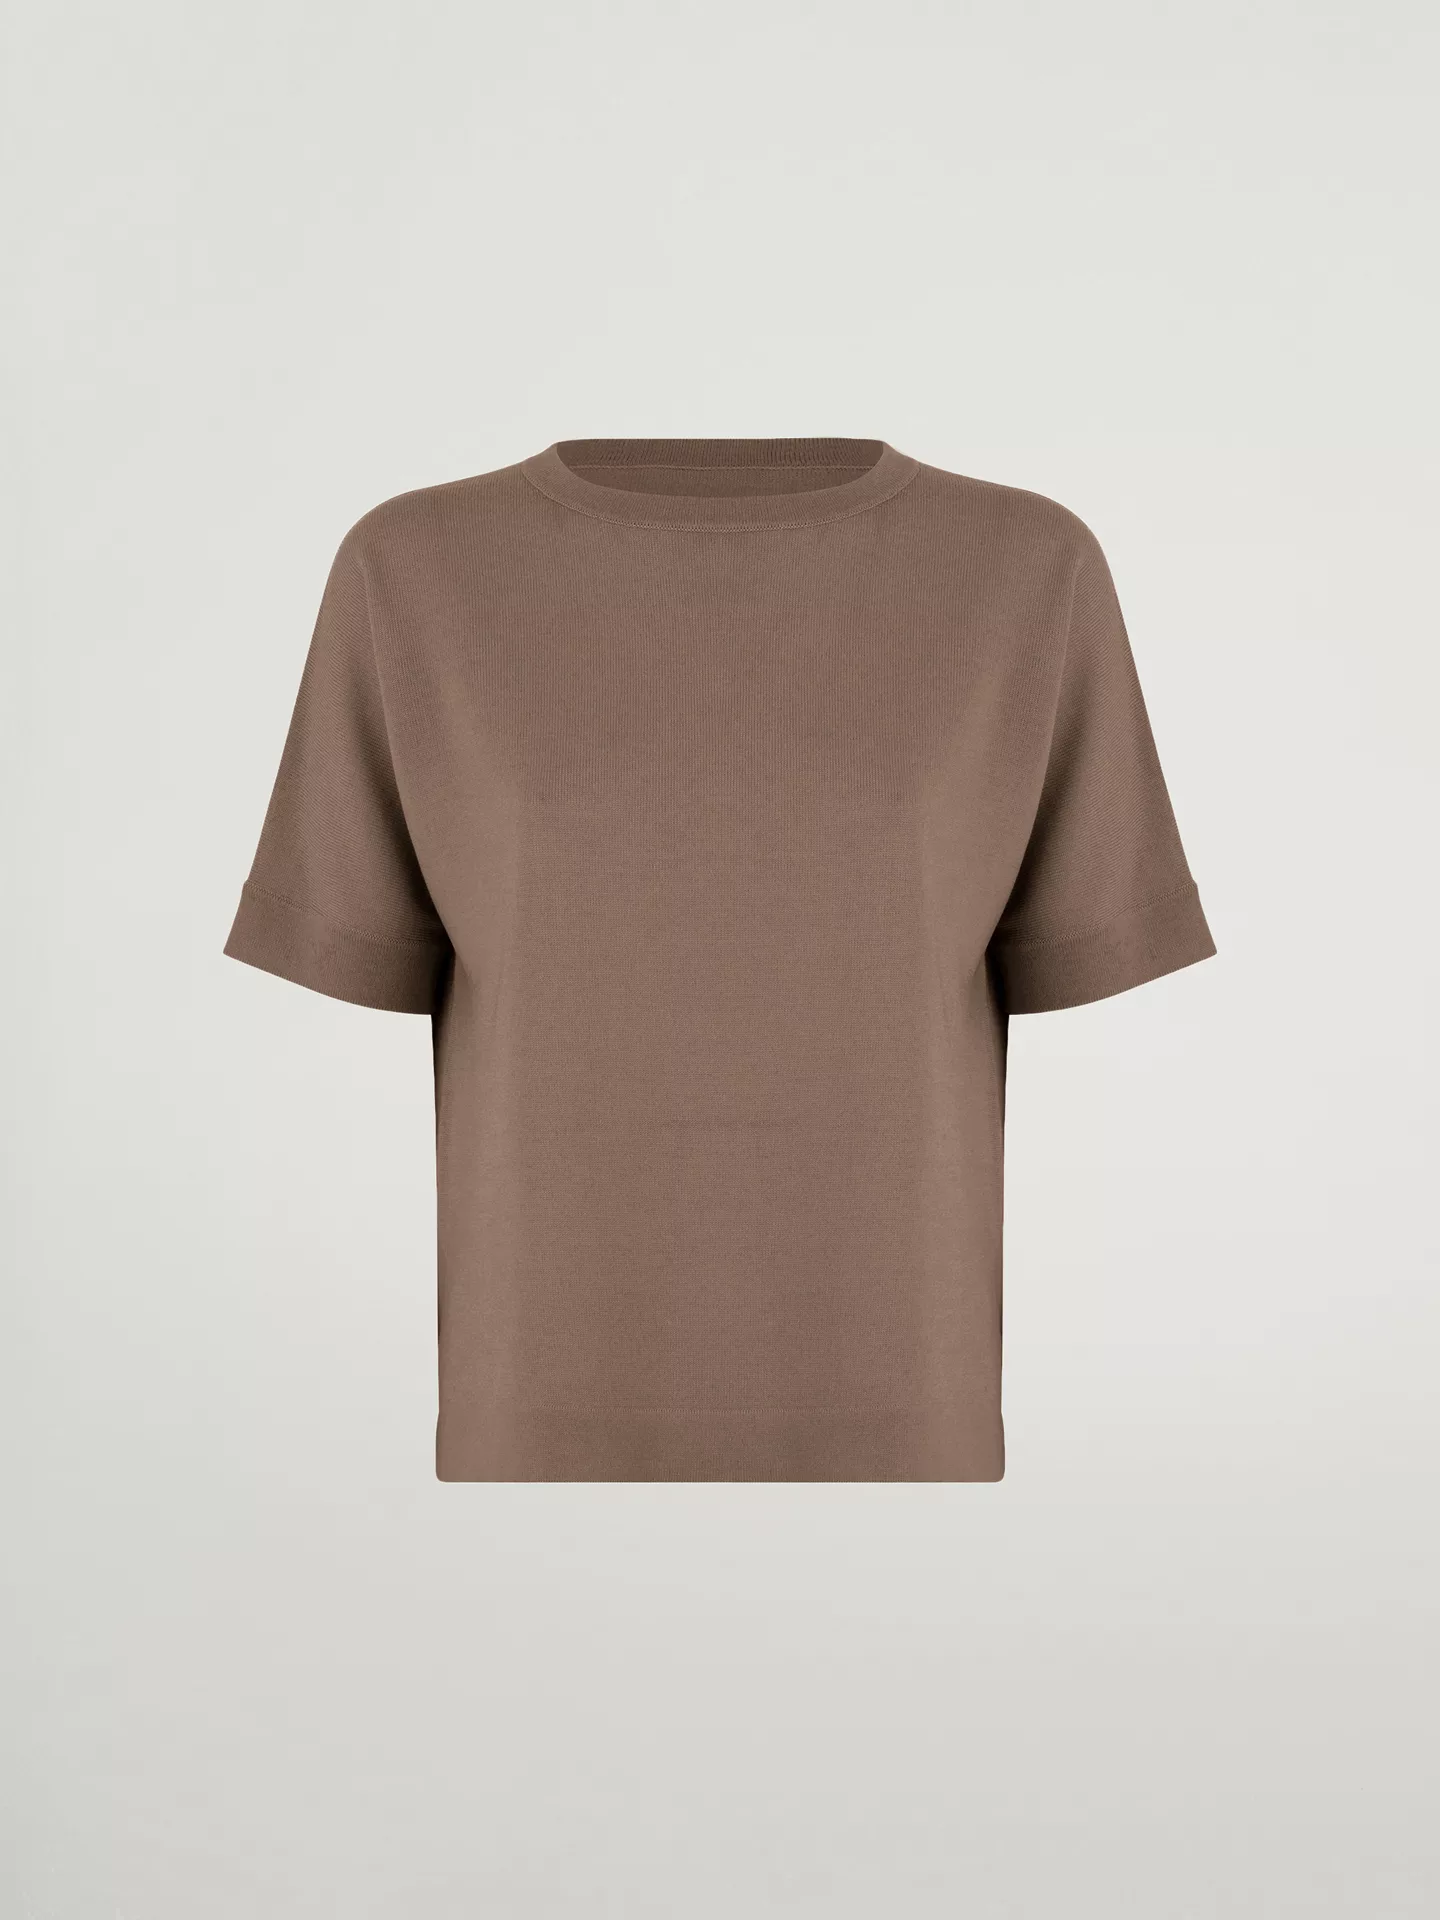 Wolford - Merino Blend Top Short Sleeves, Frau, beige mele, Größe: L günstig online kaufen